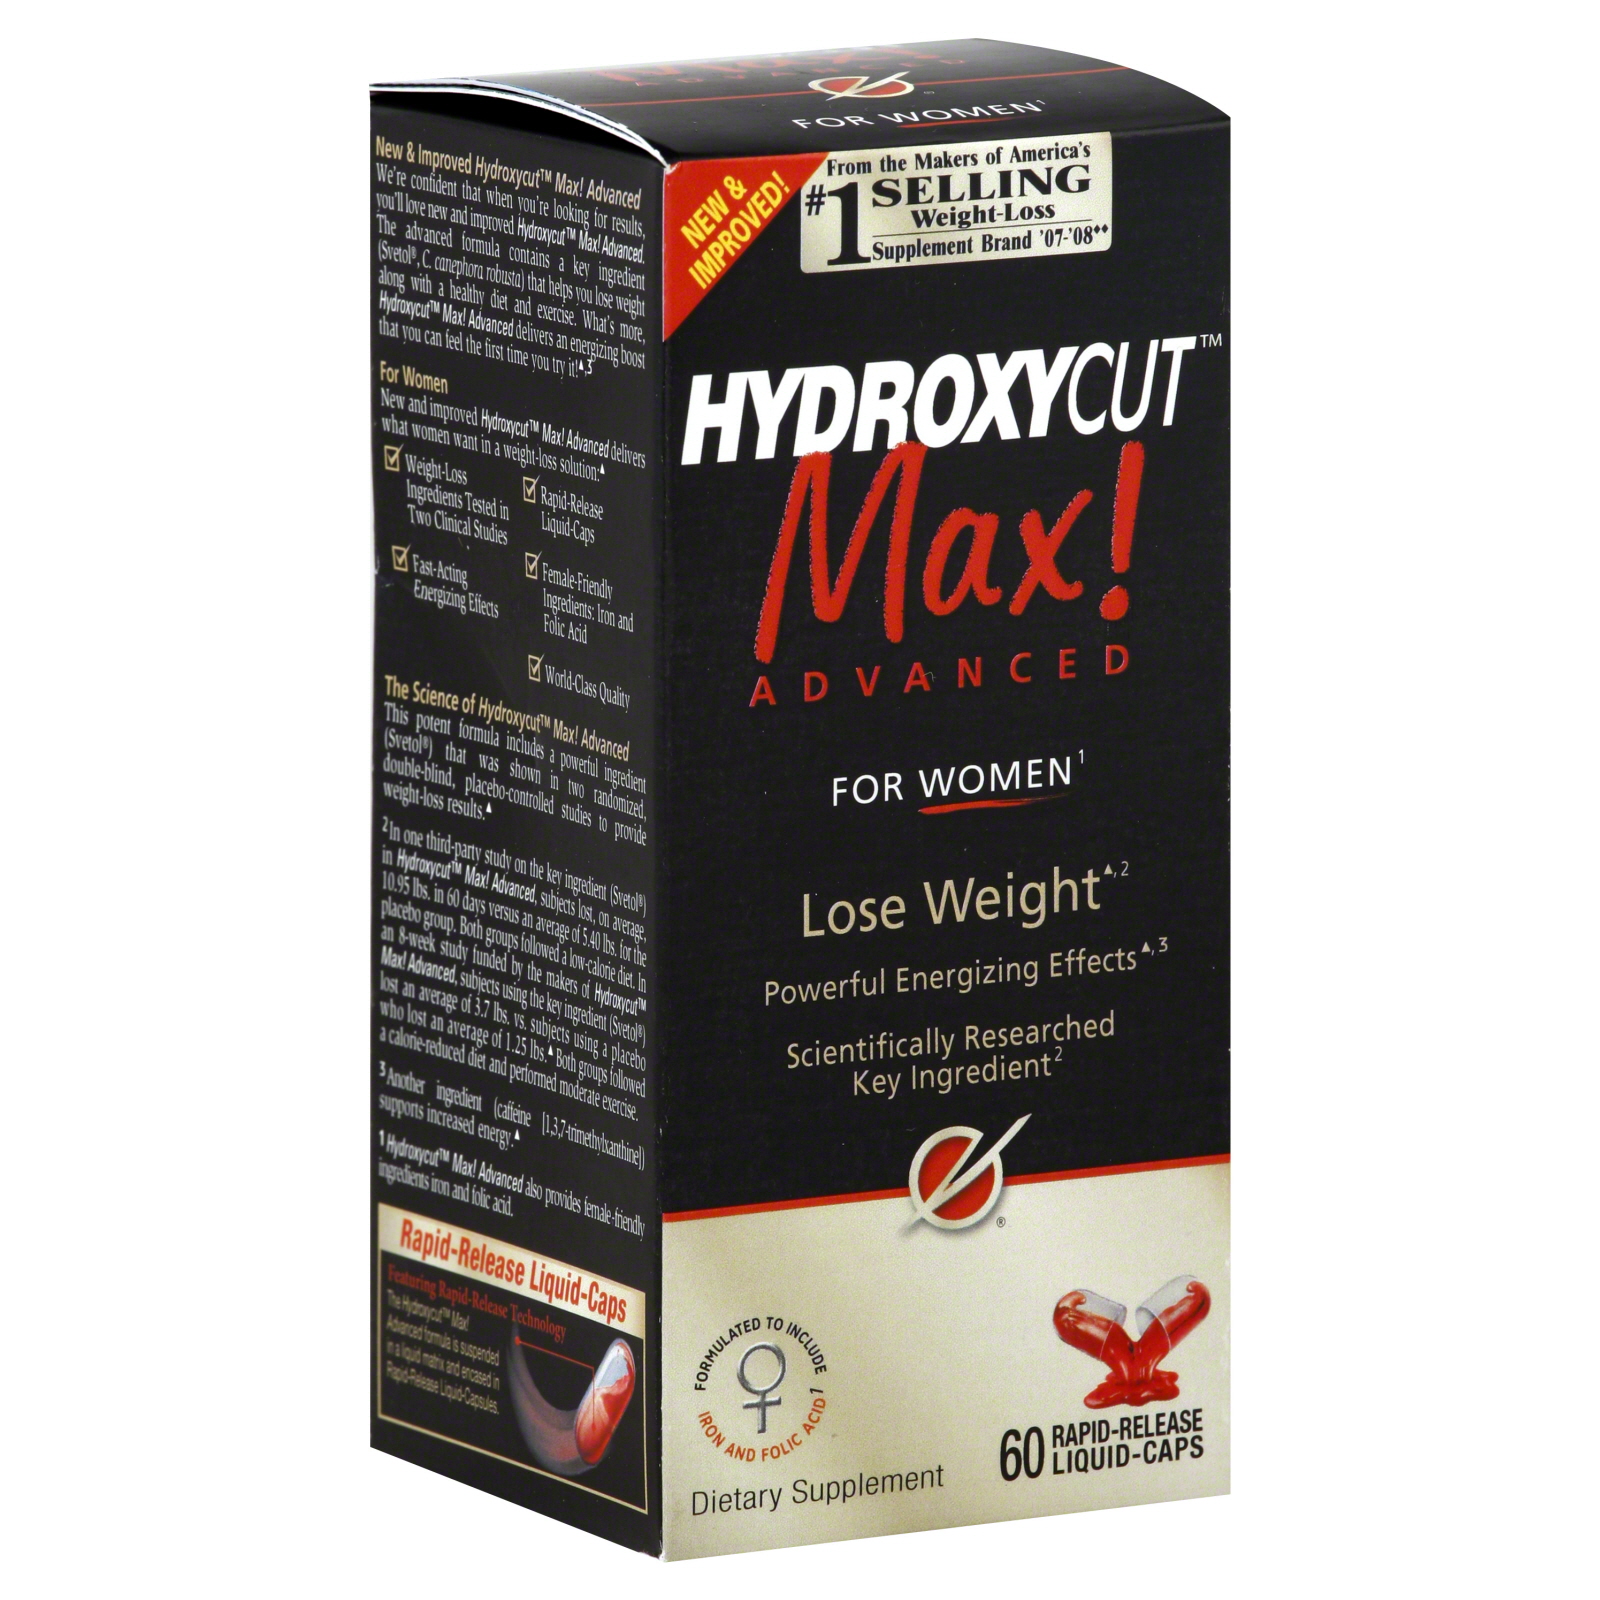 Max! Advanced Weight Loss Supplement, for Women, Rapid-Release Liquid Caps 60 liquid-caps